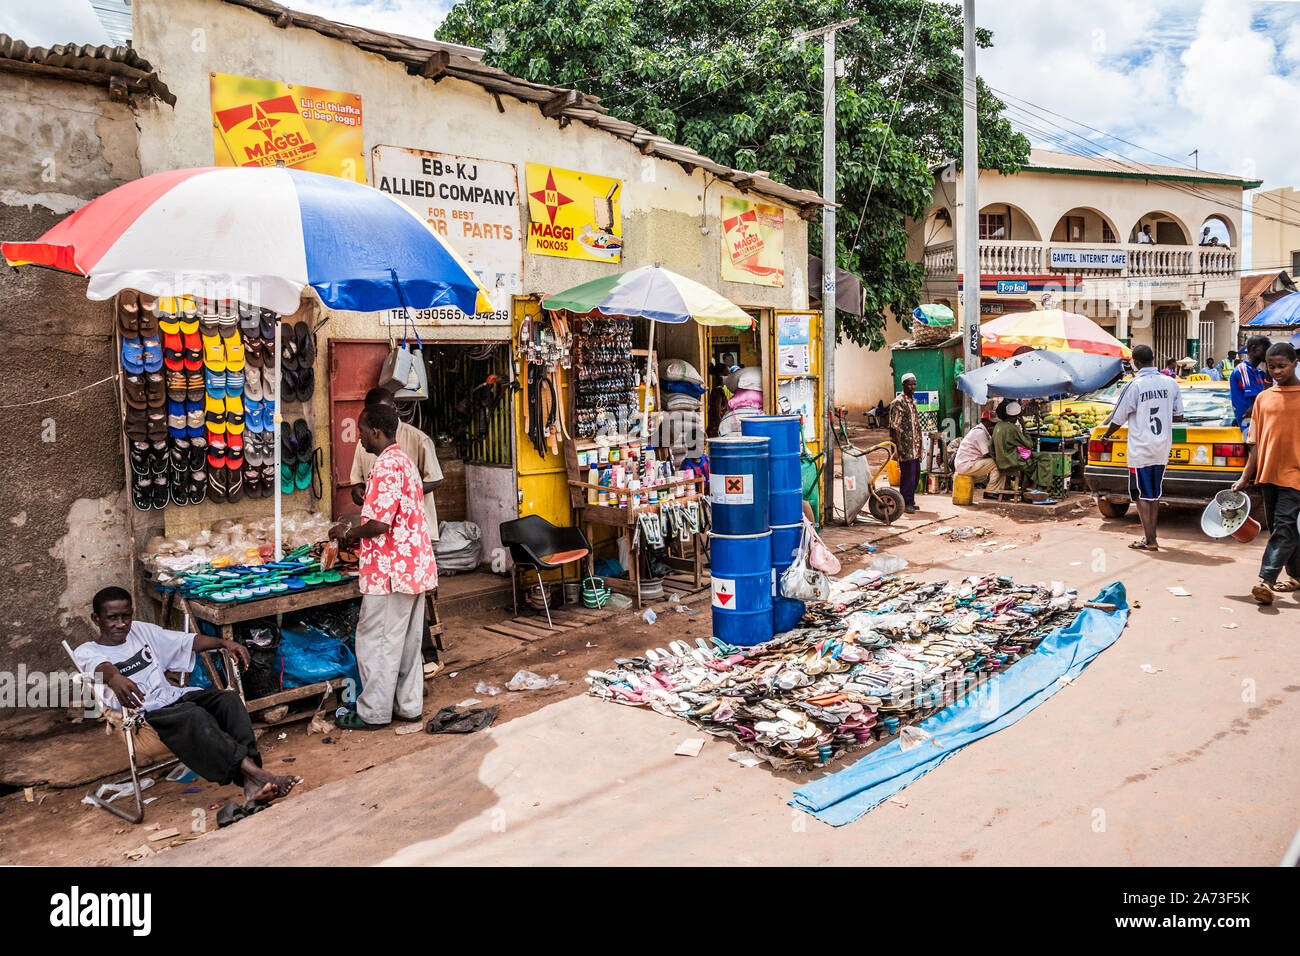 Eine geschäftige Straße Szene in Serrekunda in Gambia, Westafrika. Stockfoto